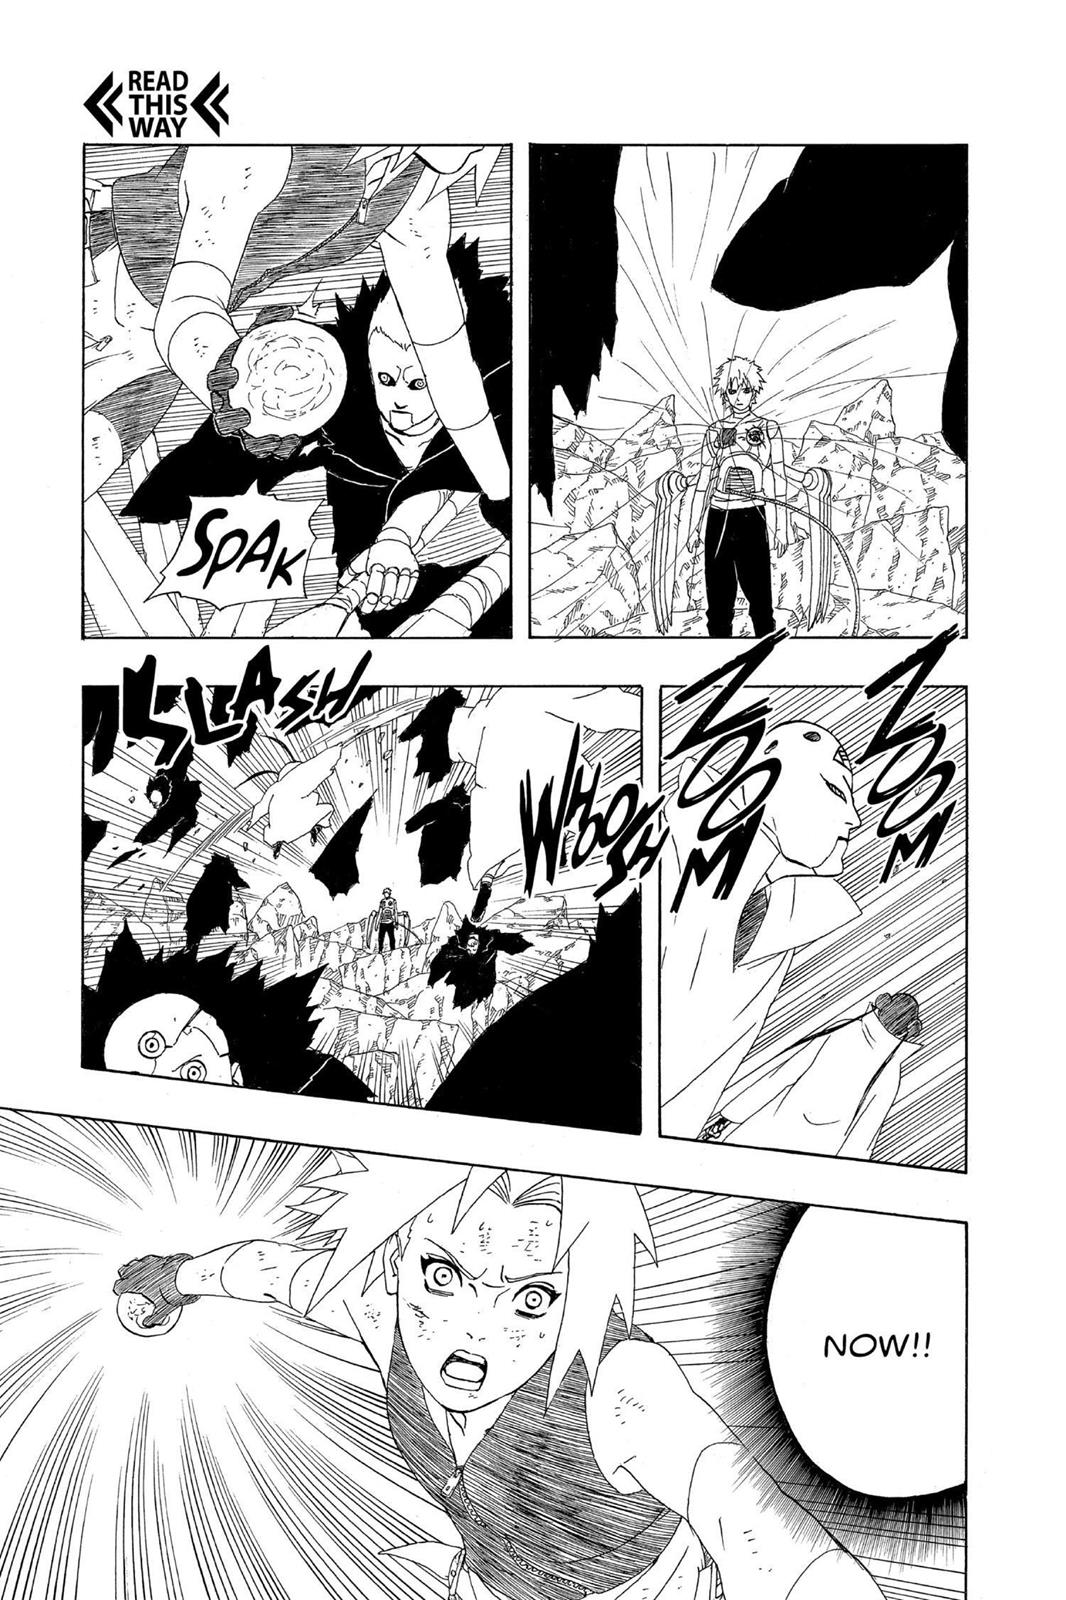 Sakura (Boruto) vs Naruto (Boruto/Sem Kurama)  - Página 6 0273-011